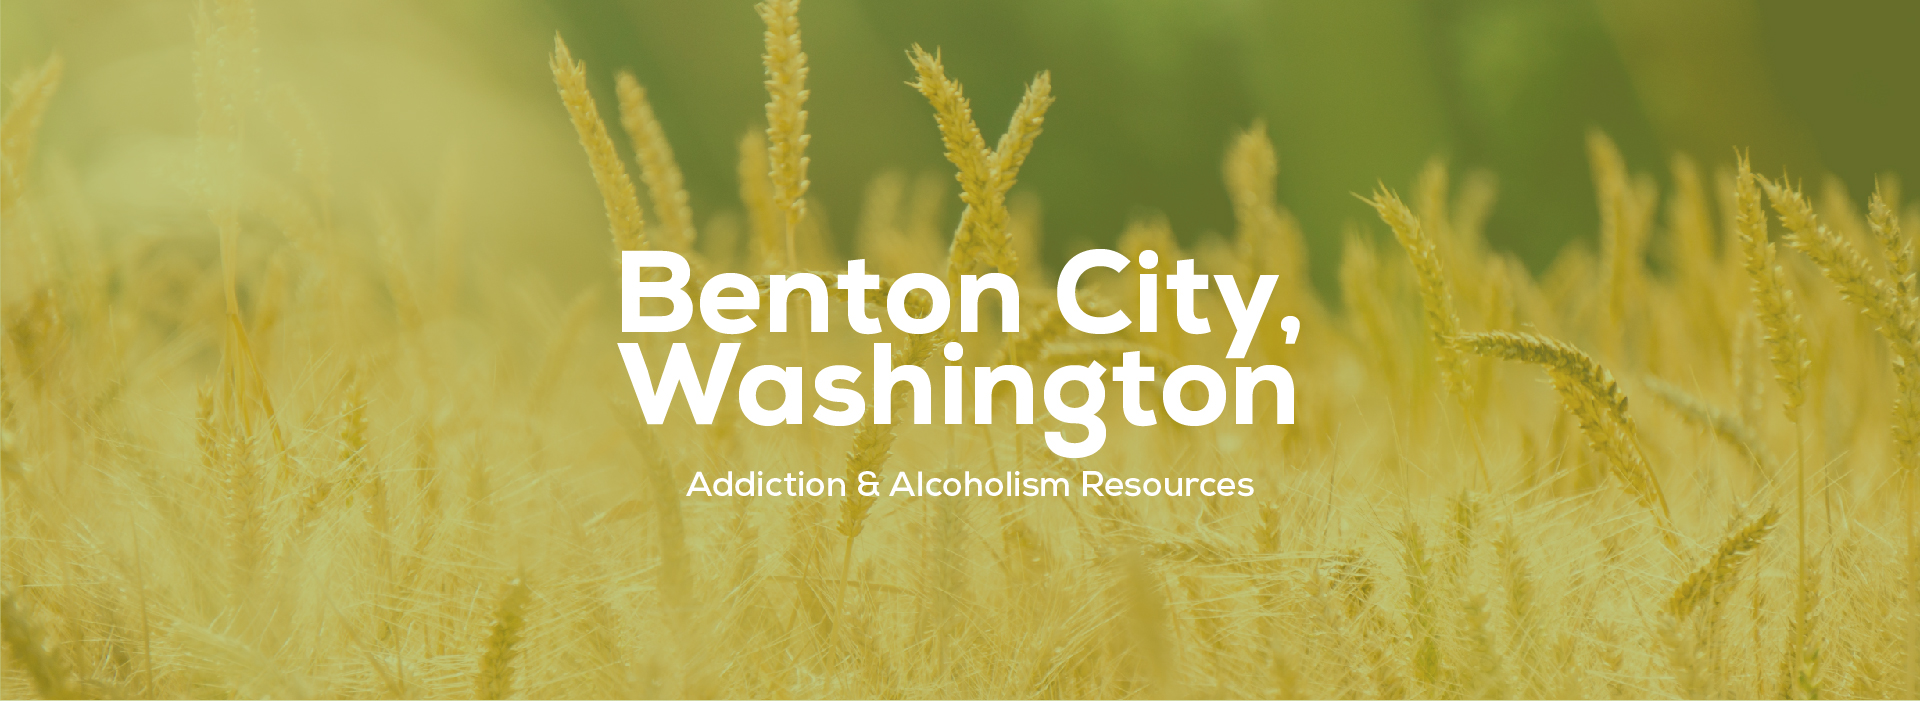 Benton City, Washington addiction resources